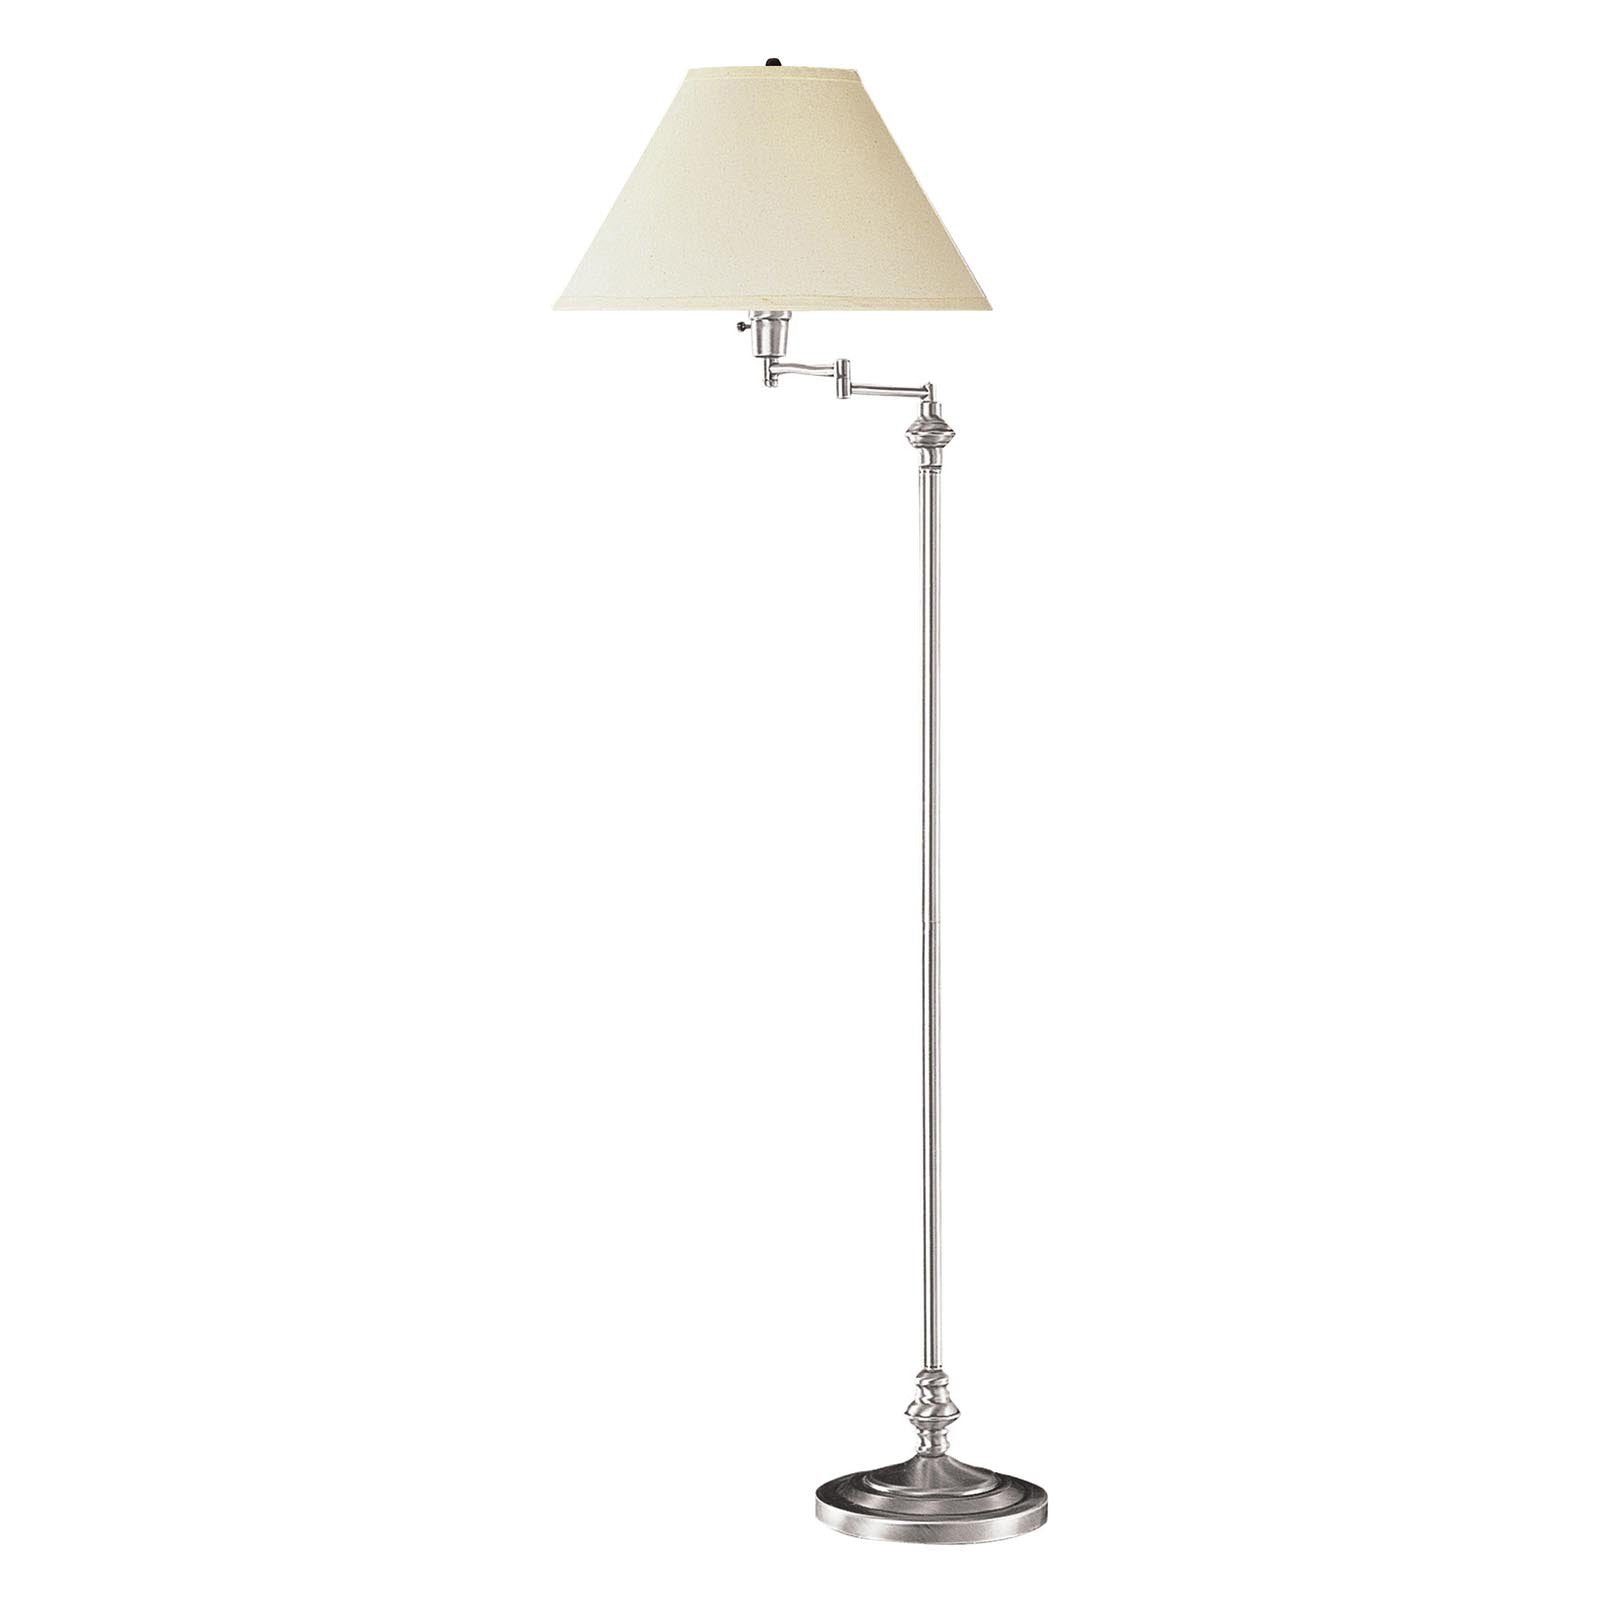 59" Nickel Swing Arm Floor Lamp With Beige Empire Shade